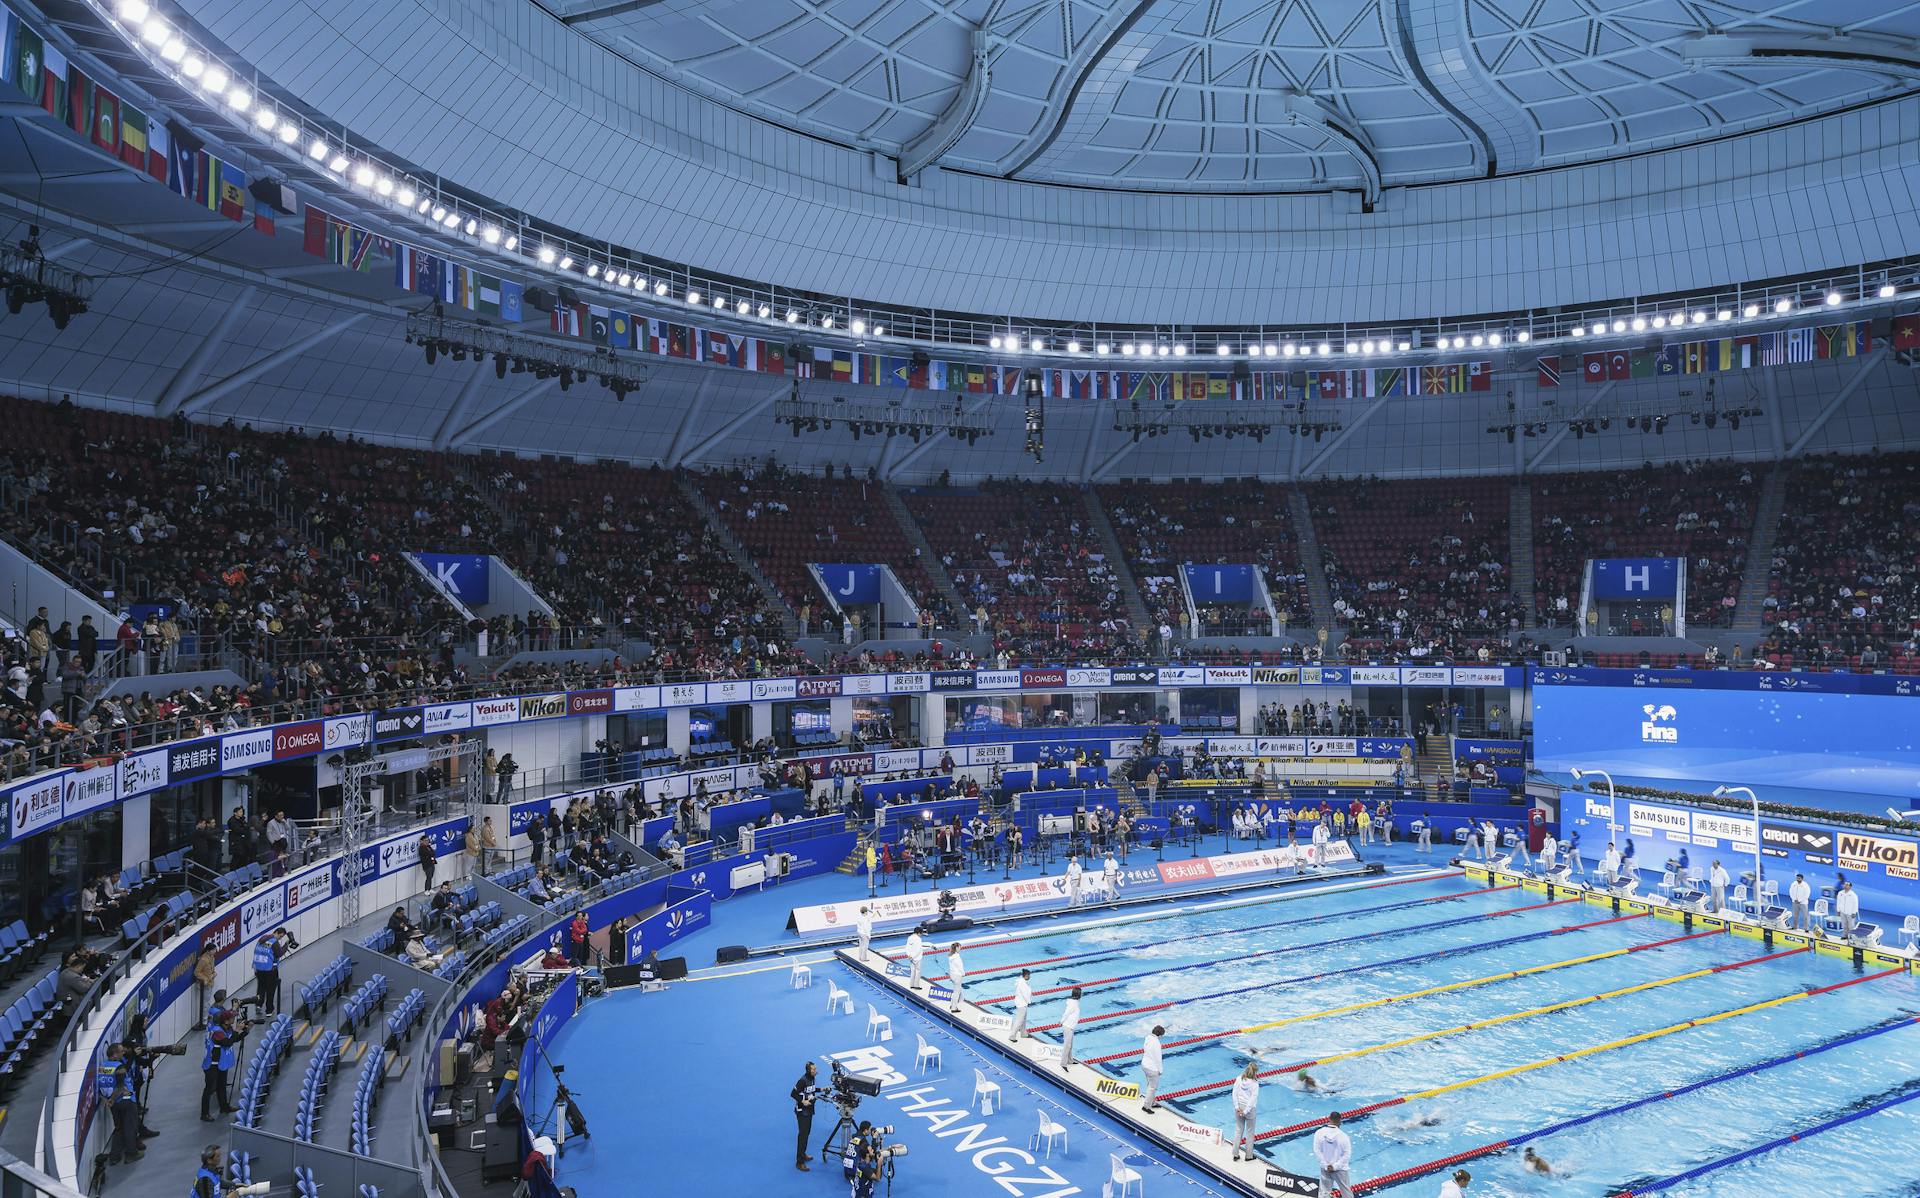 FINA World Swimming Championships, swimming pool, tennis arena, interior, competition, stadium